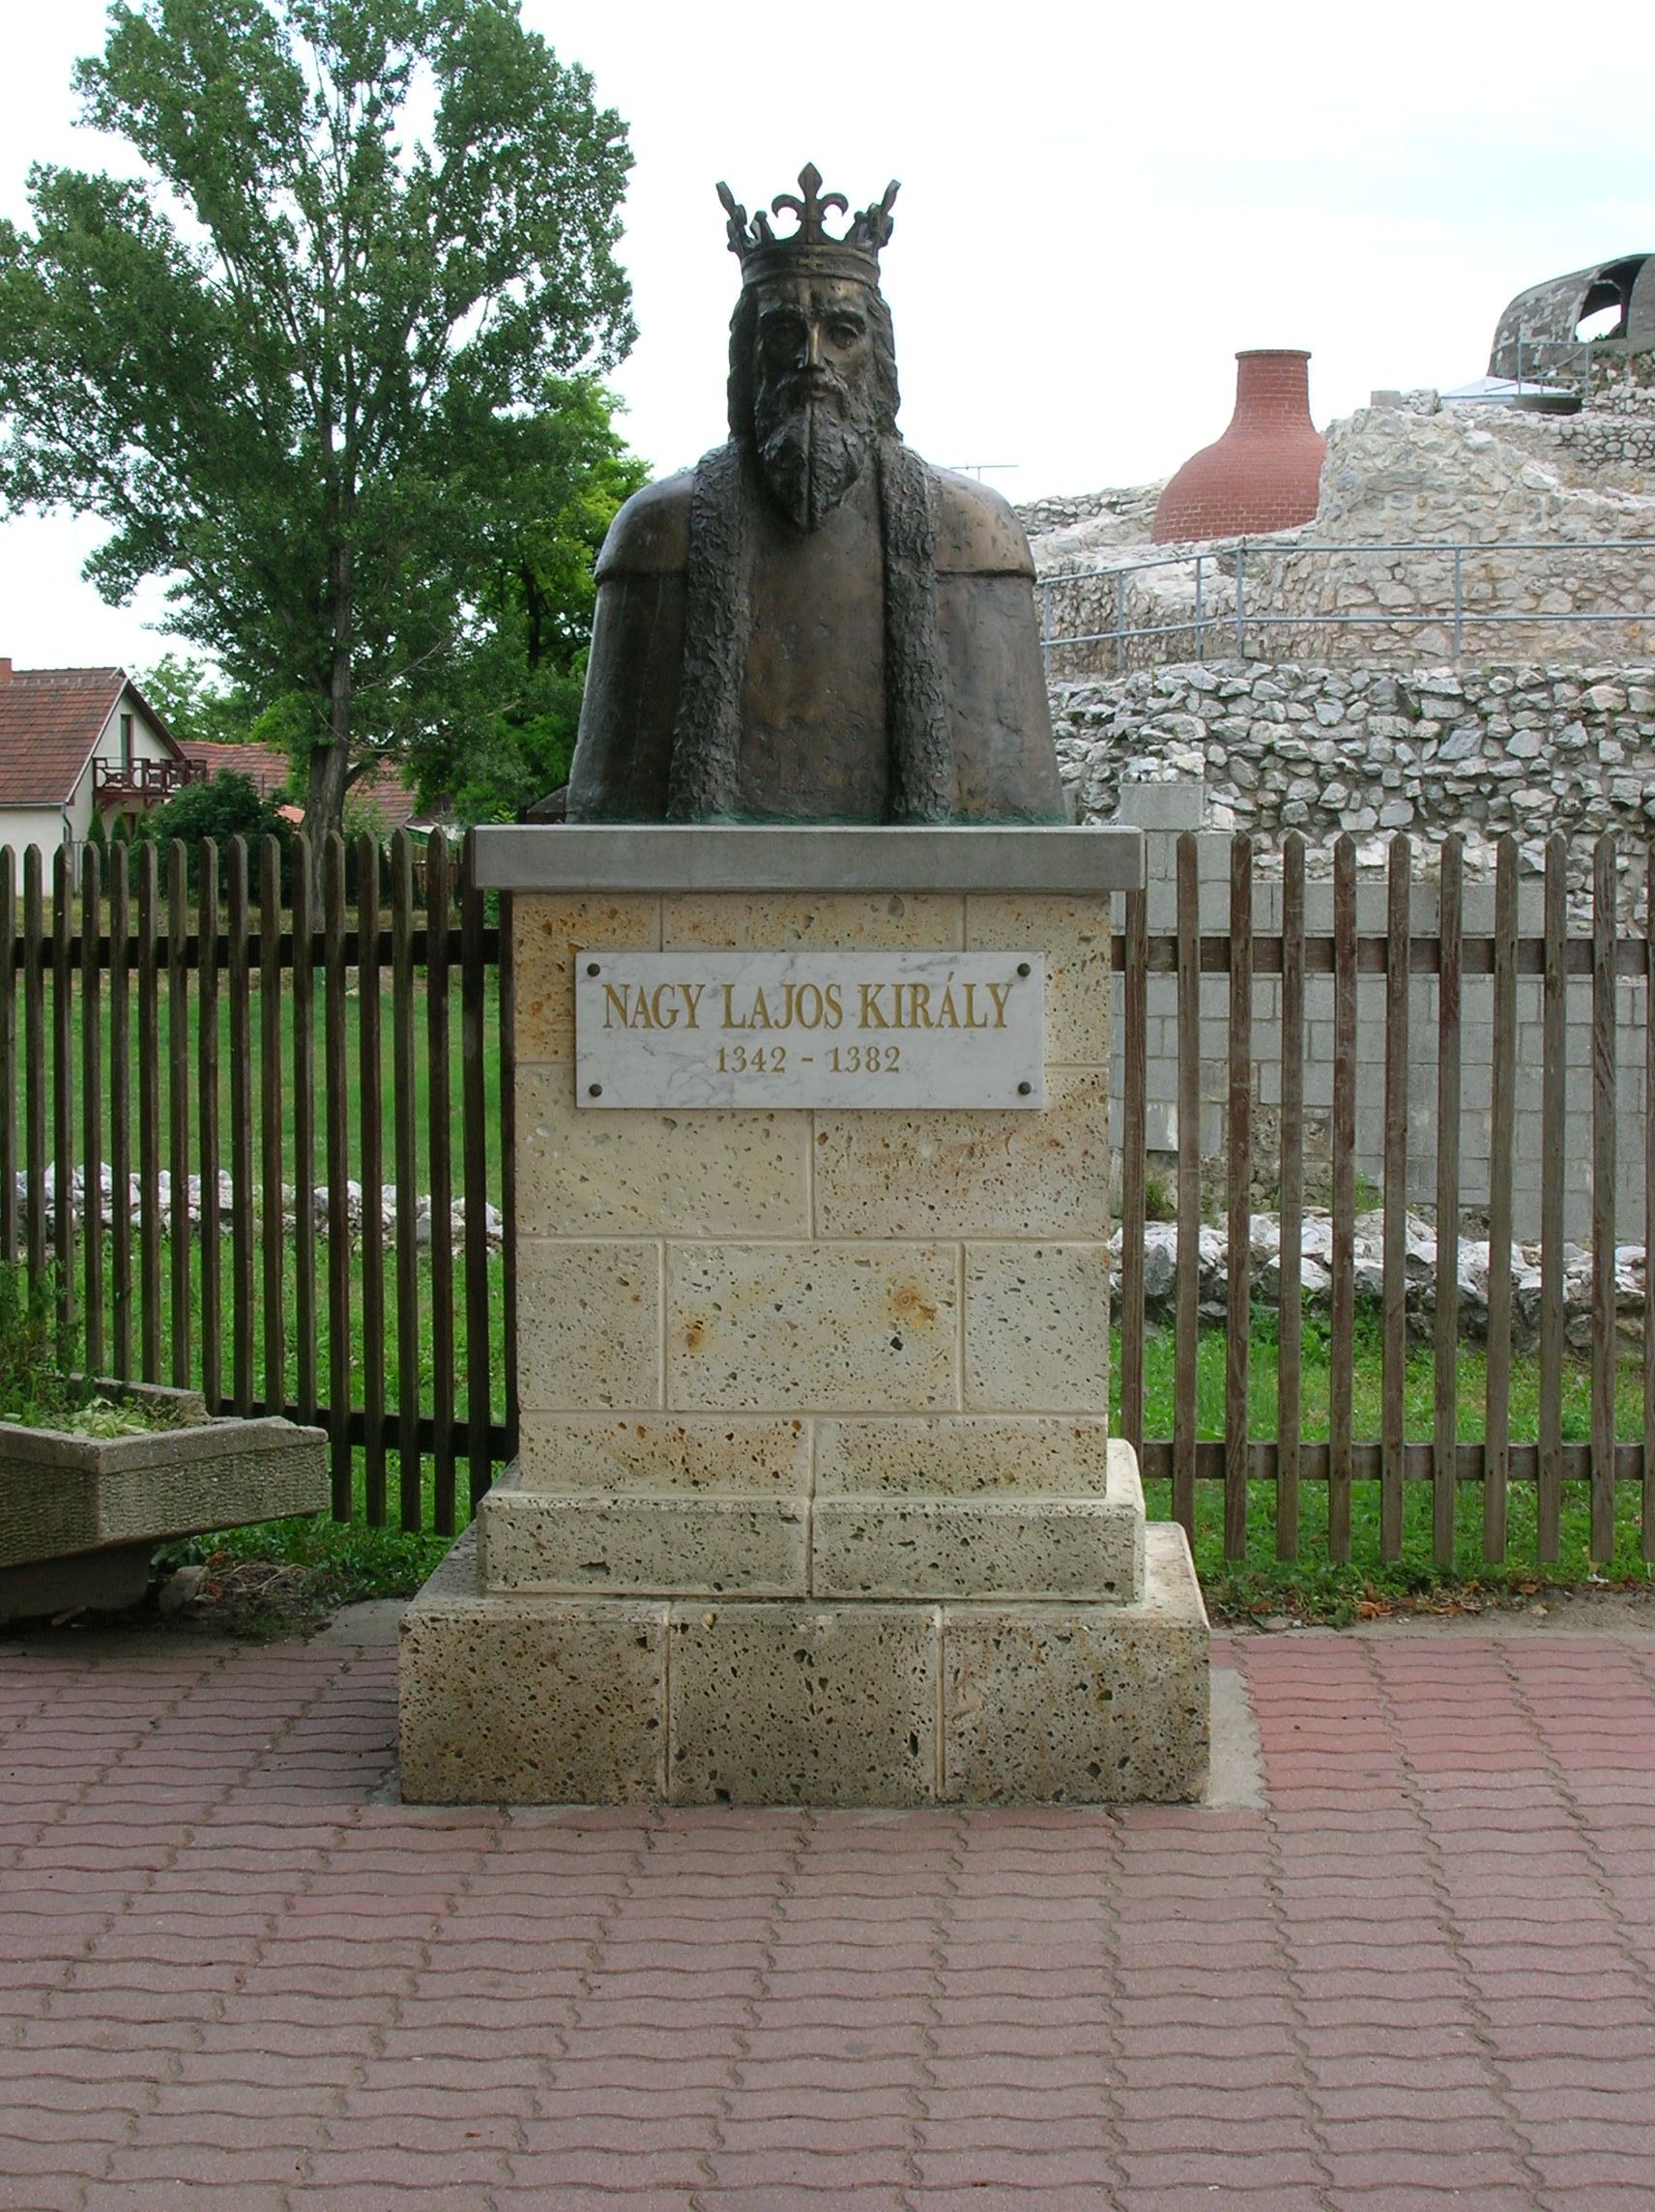 http://upload.wikimedia.org/wikipedia/commons/2/2e/Diosgyor_king_louis_statue.jpg